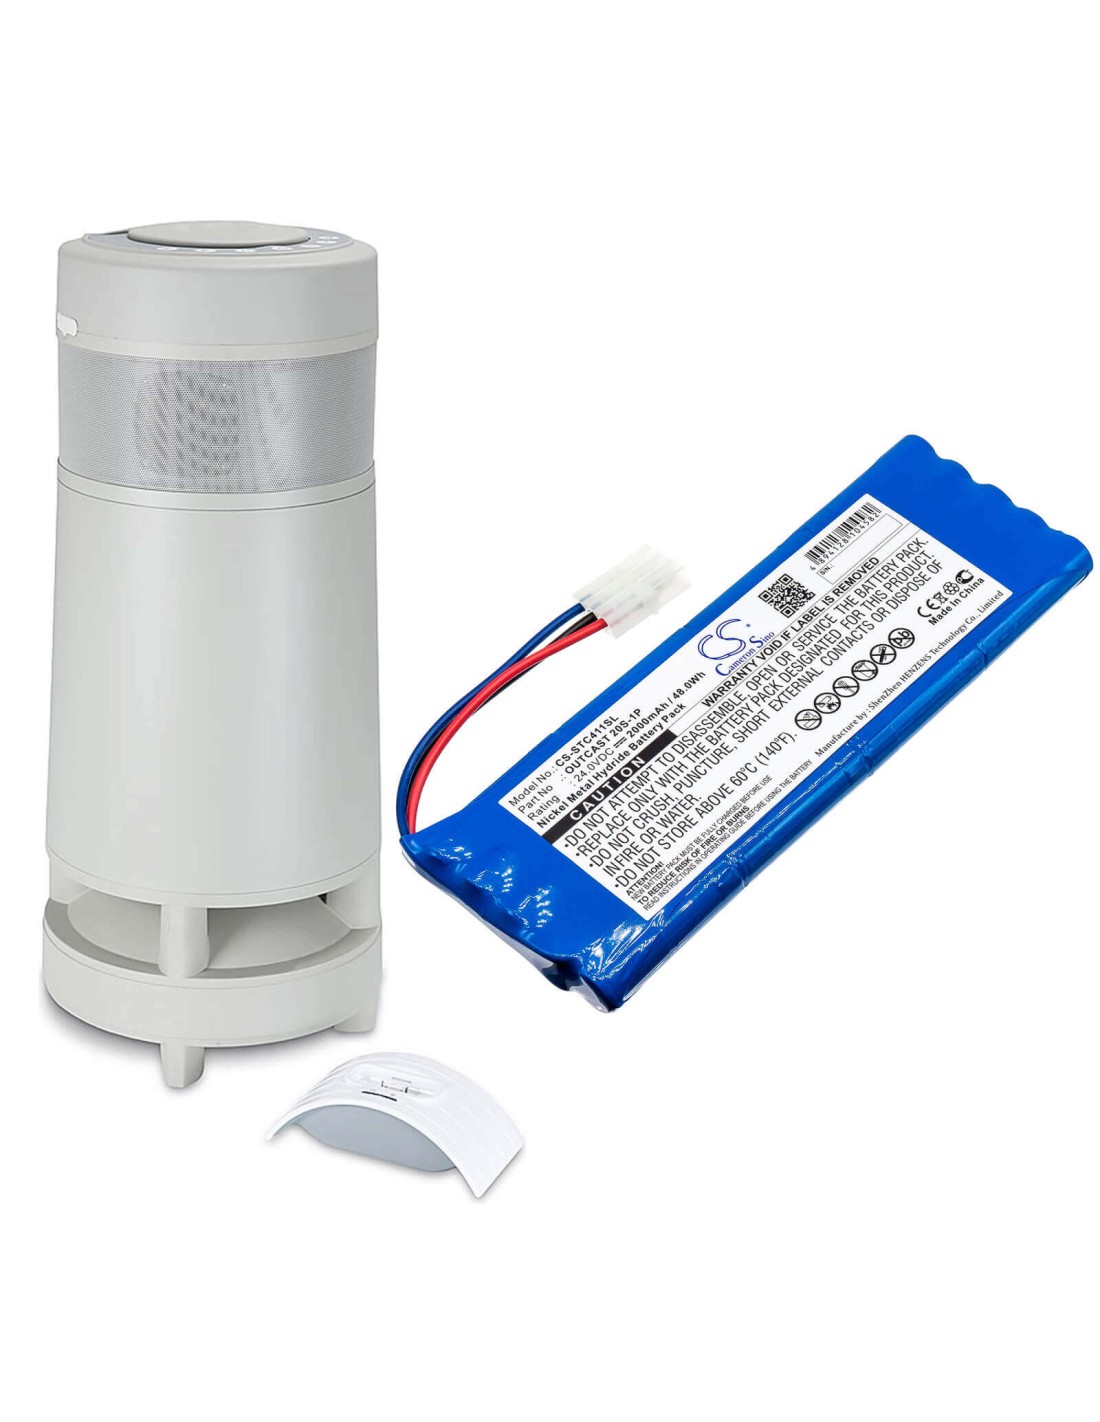 Battery for Soundcast Outcast Ico 421, Ico411a, Ico410, Ico411a-4n 24.0V, 2000mAh - 48.00Wh